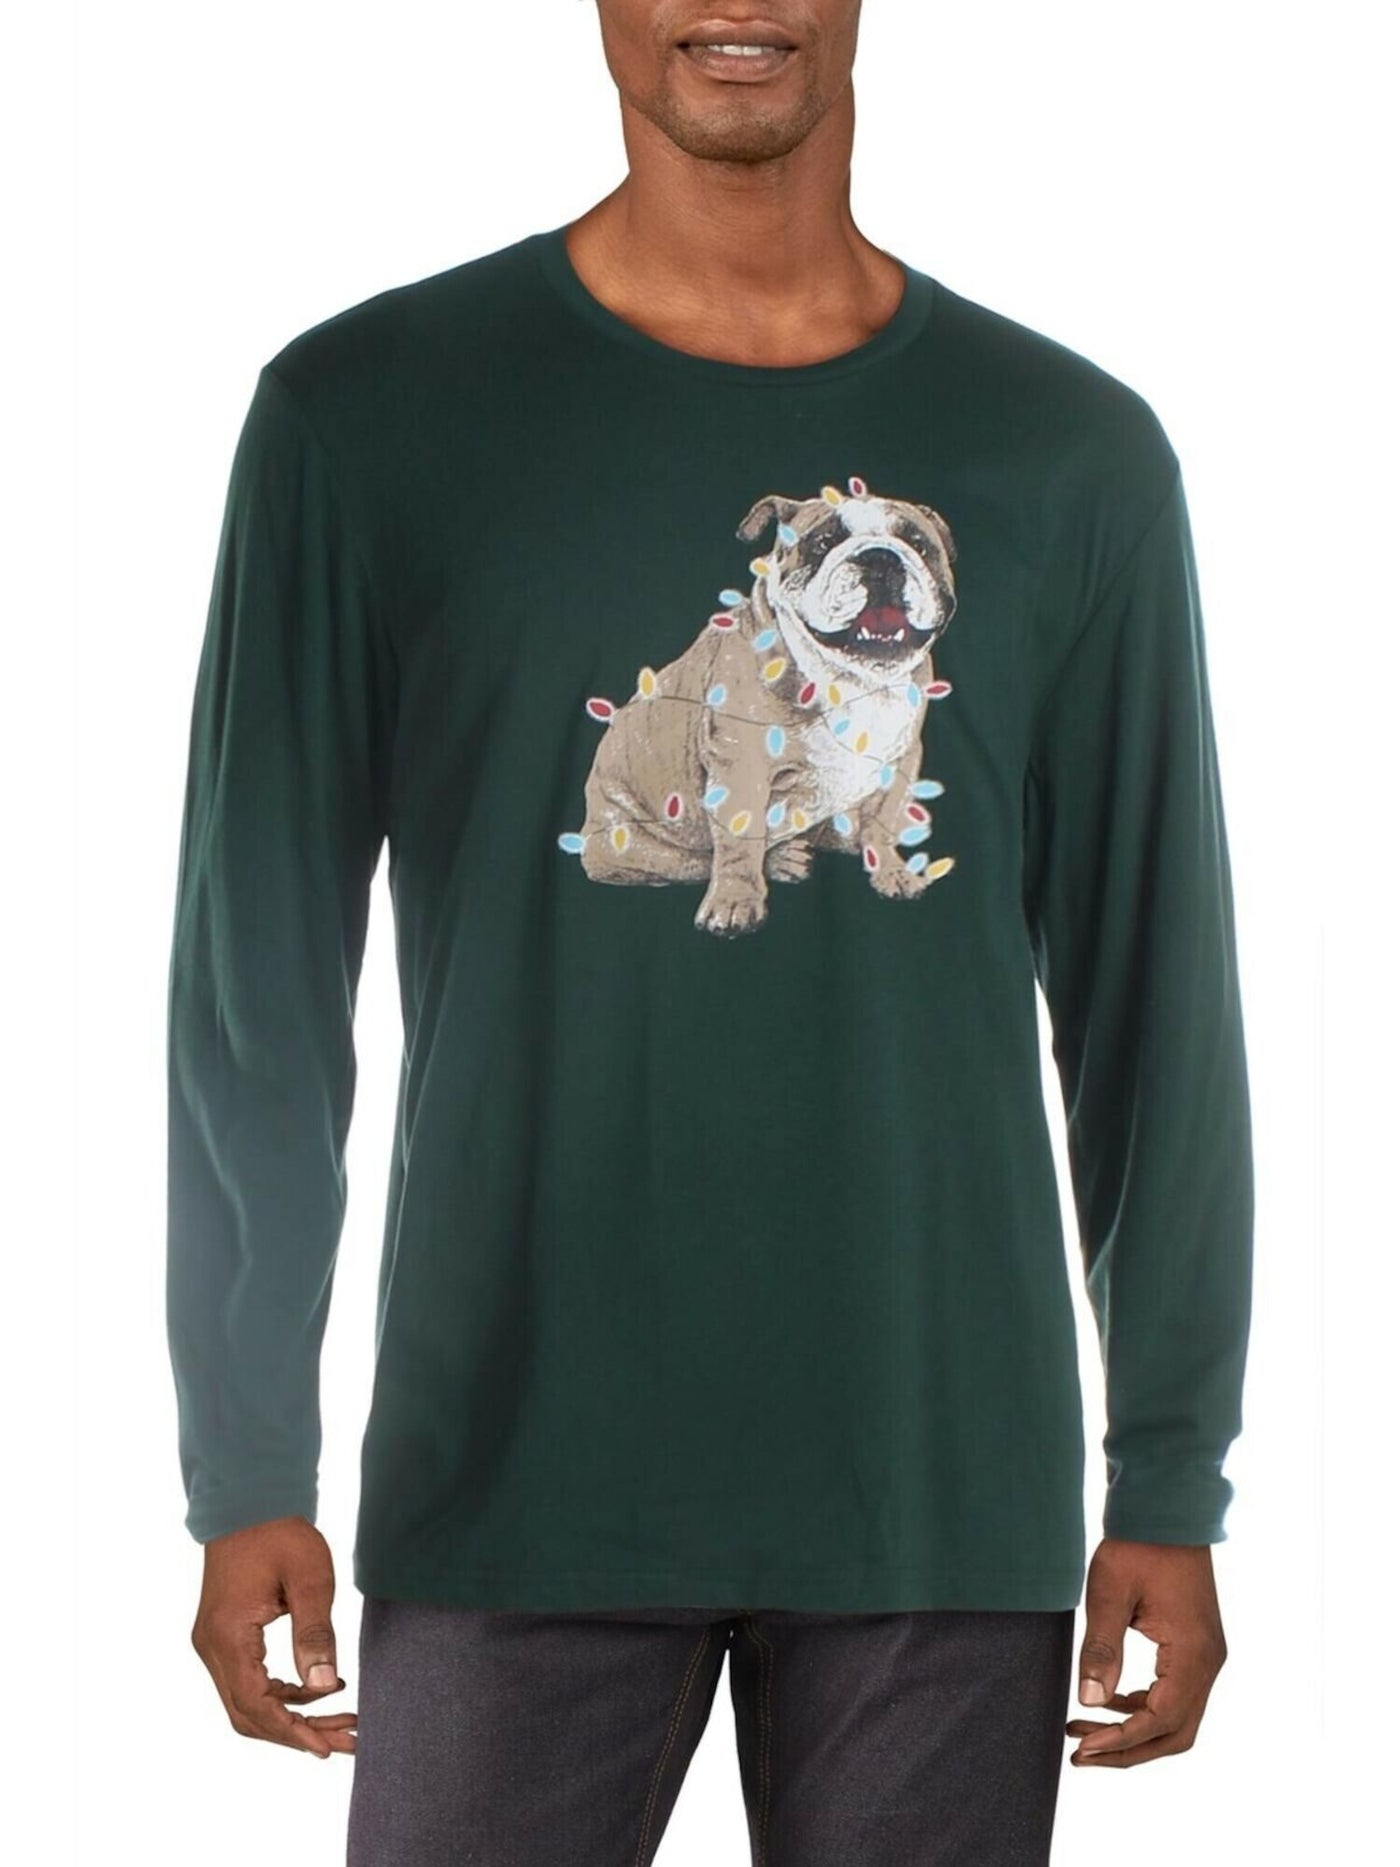 CLUBROOM Mens Green Graphic Cotton T-Shirt L